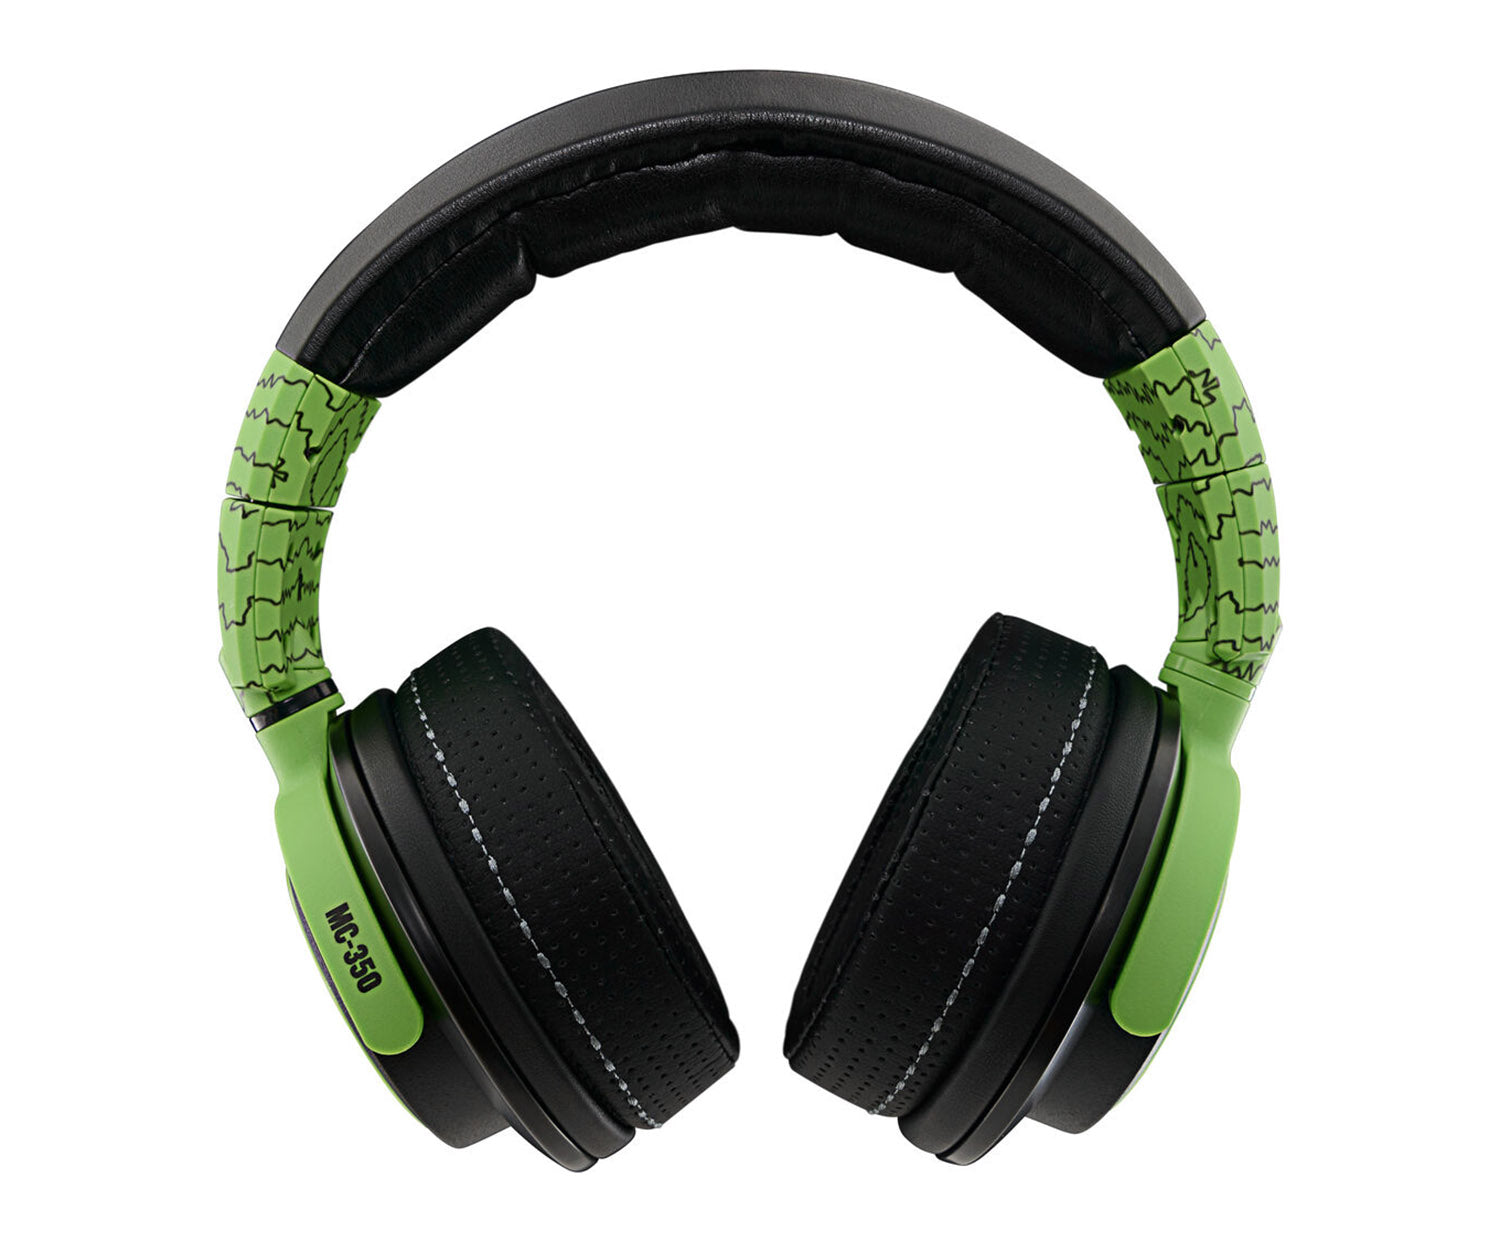 Mackie MC-350-LTD-GRN Limited Edition Professional Closed-Back Headphones - Hollywood DJ